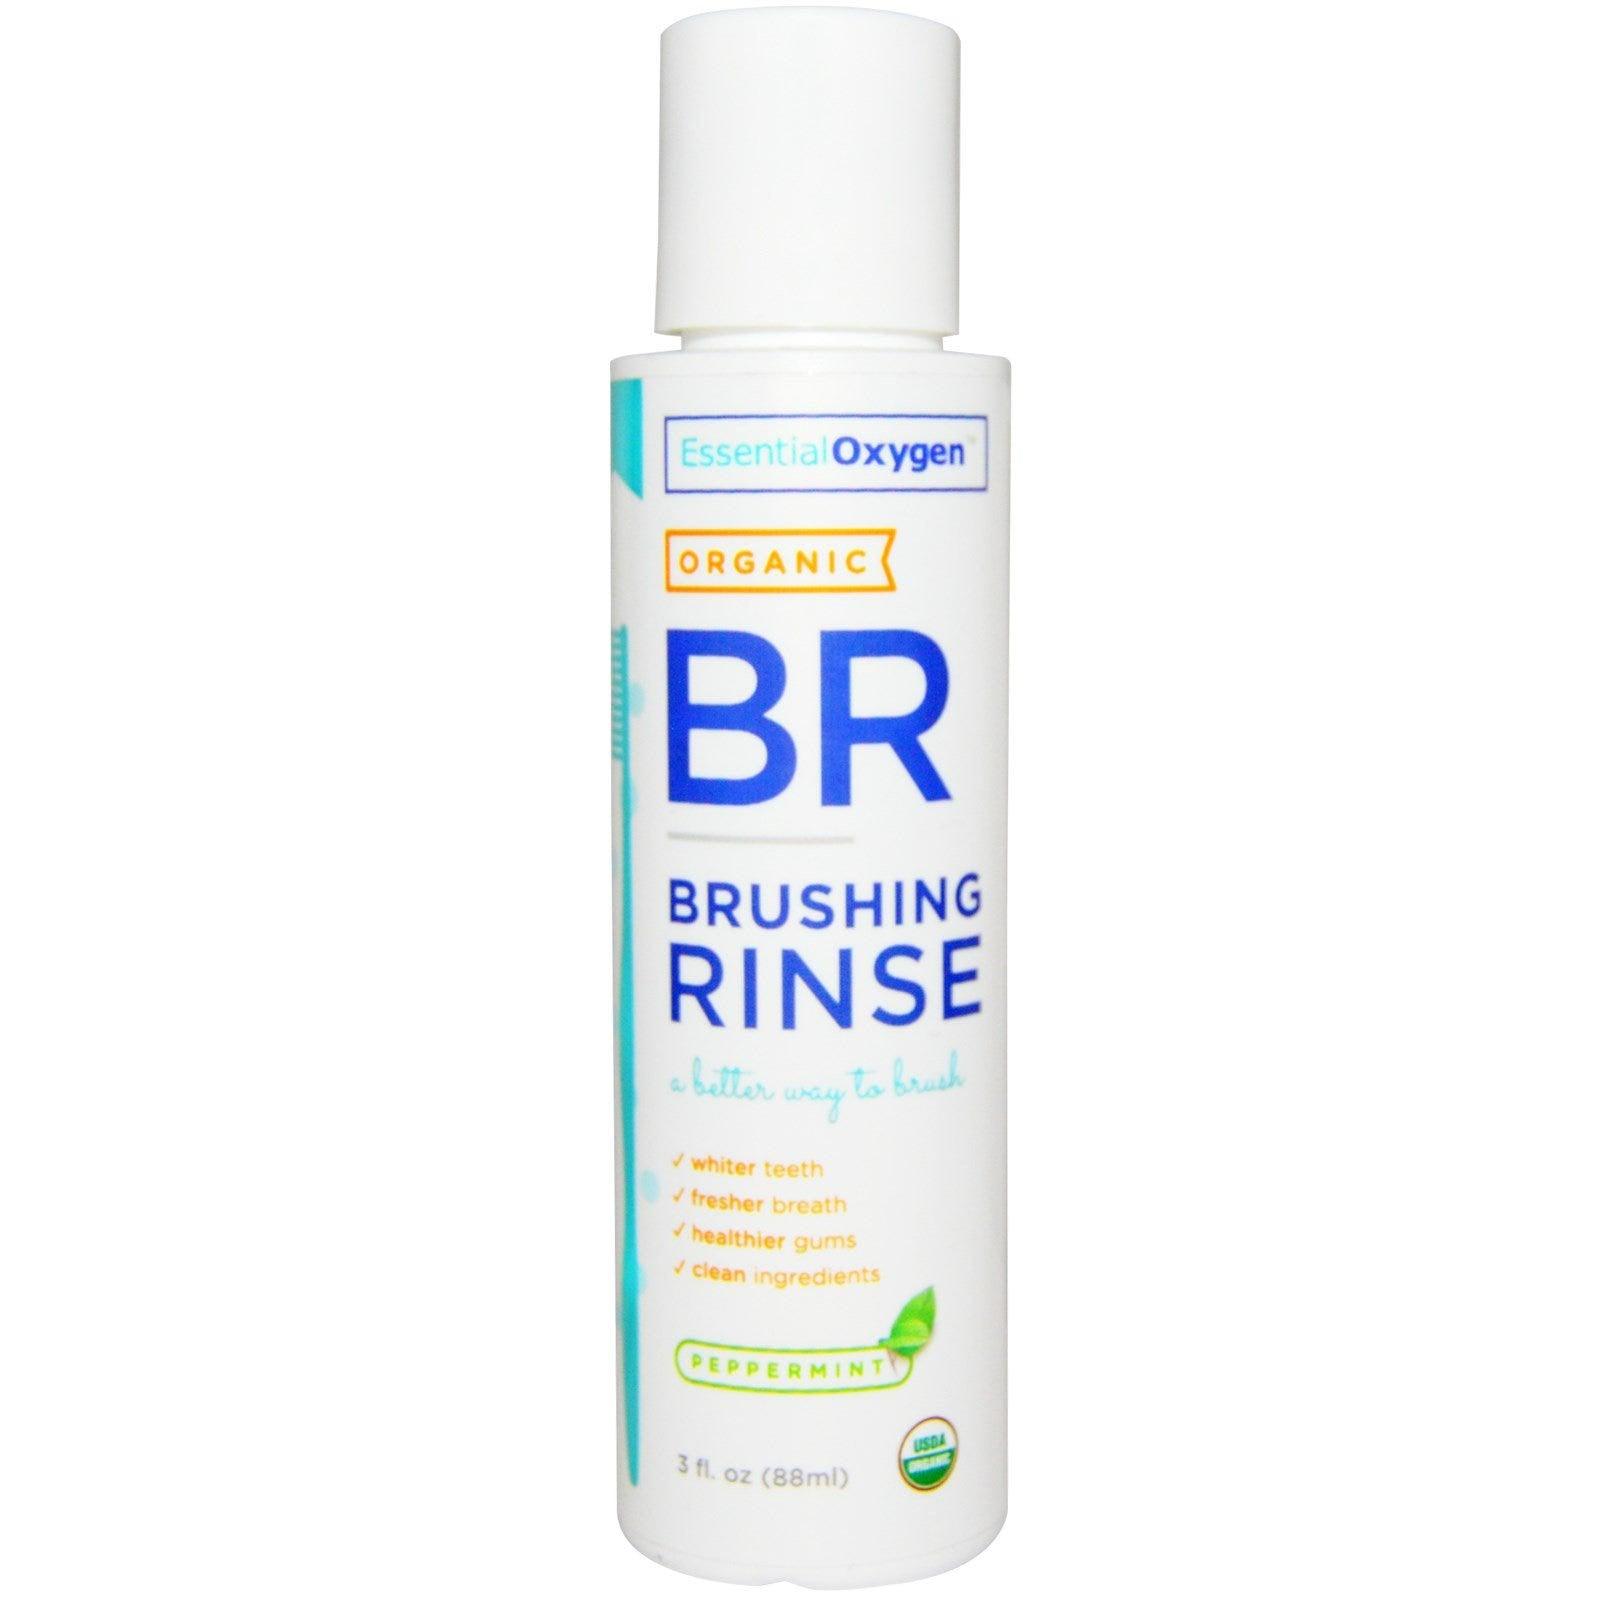 Essential Oxygen Peppermint Organic Brushing Rinse - 88ml